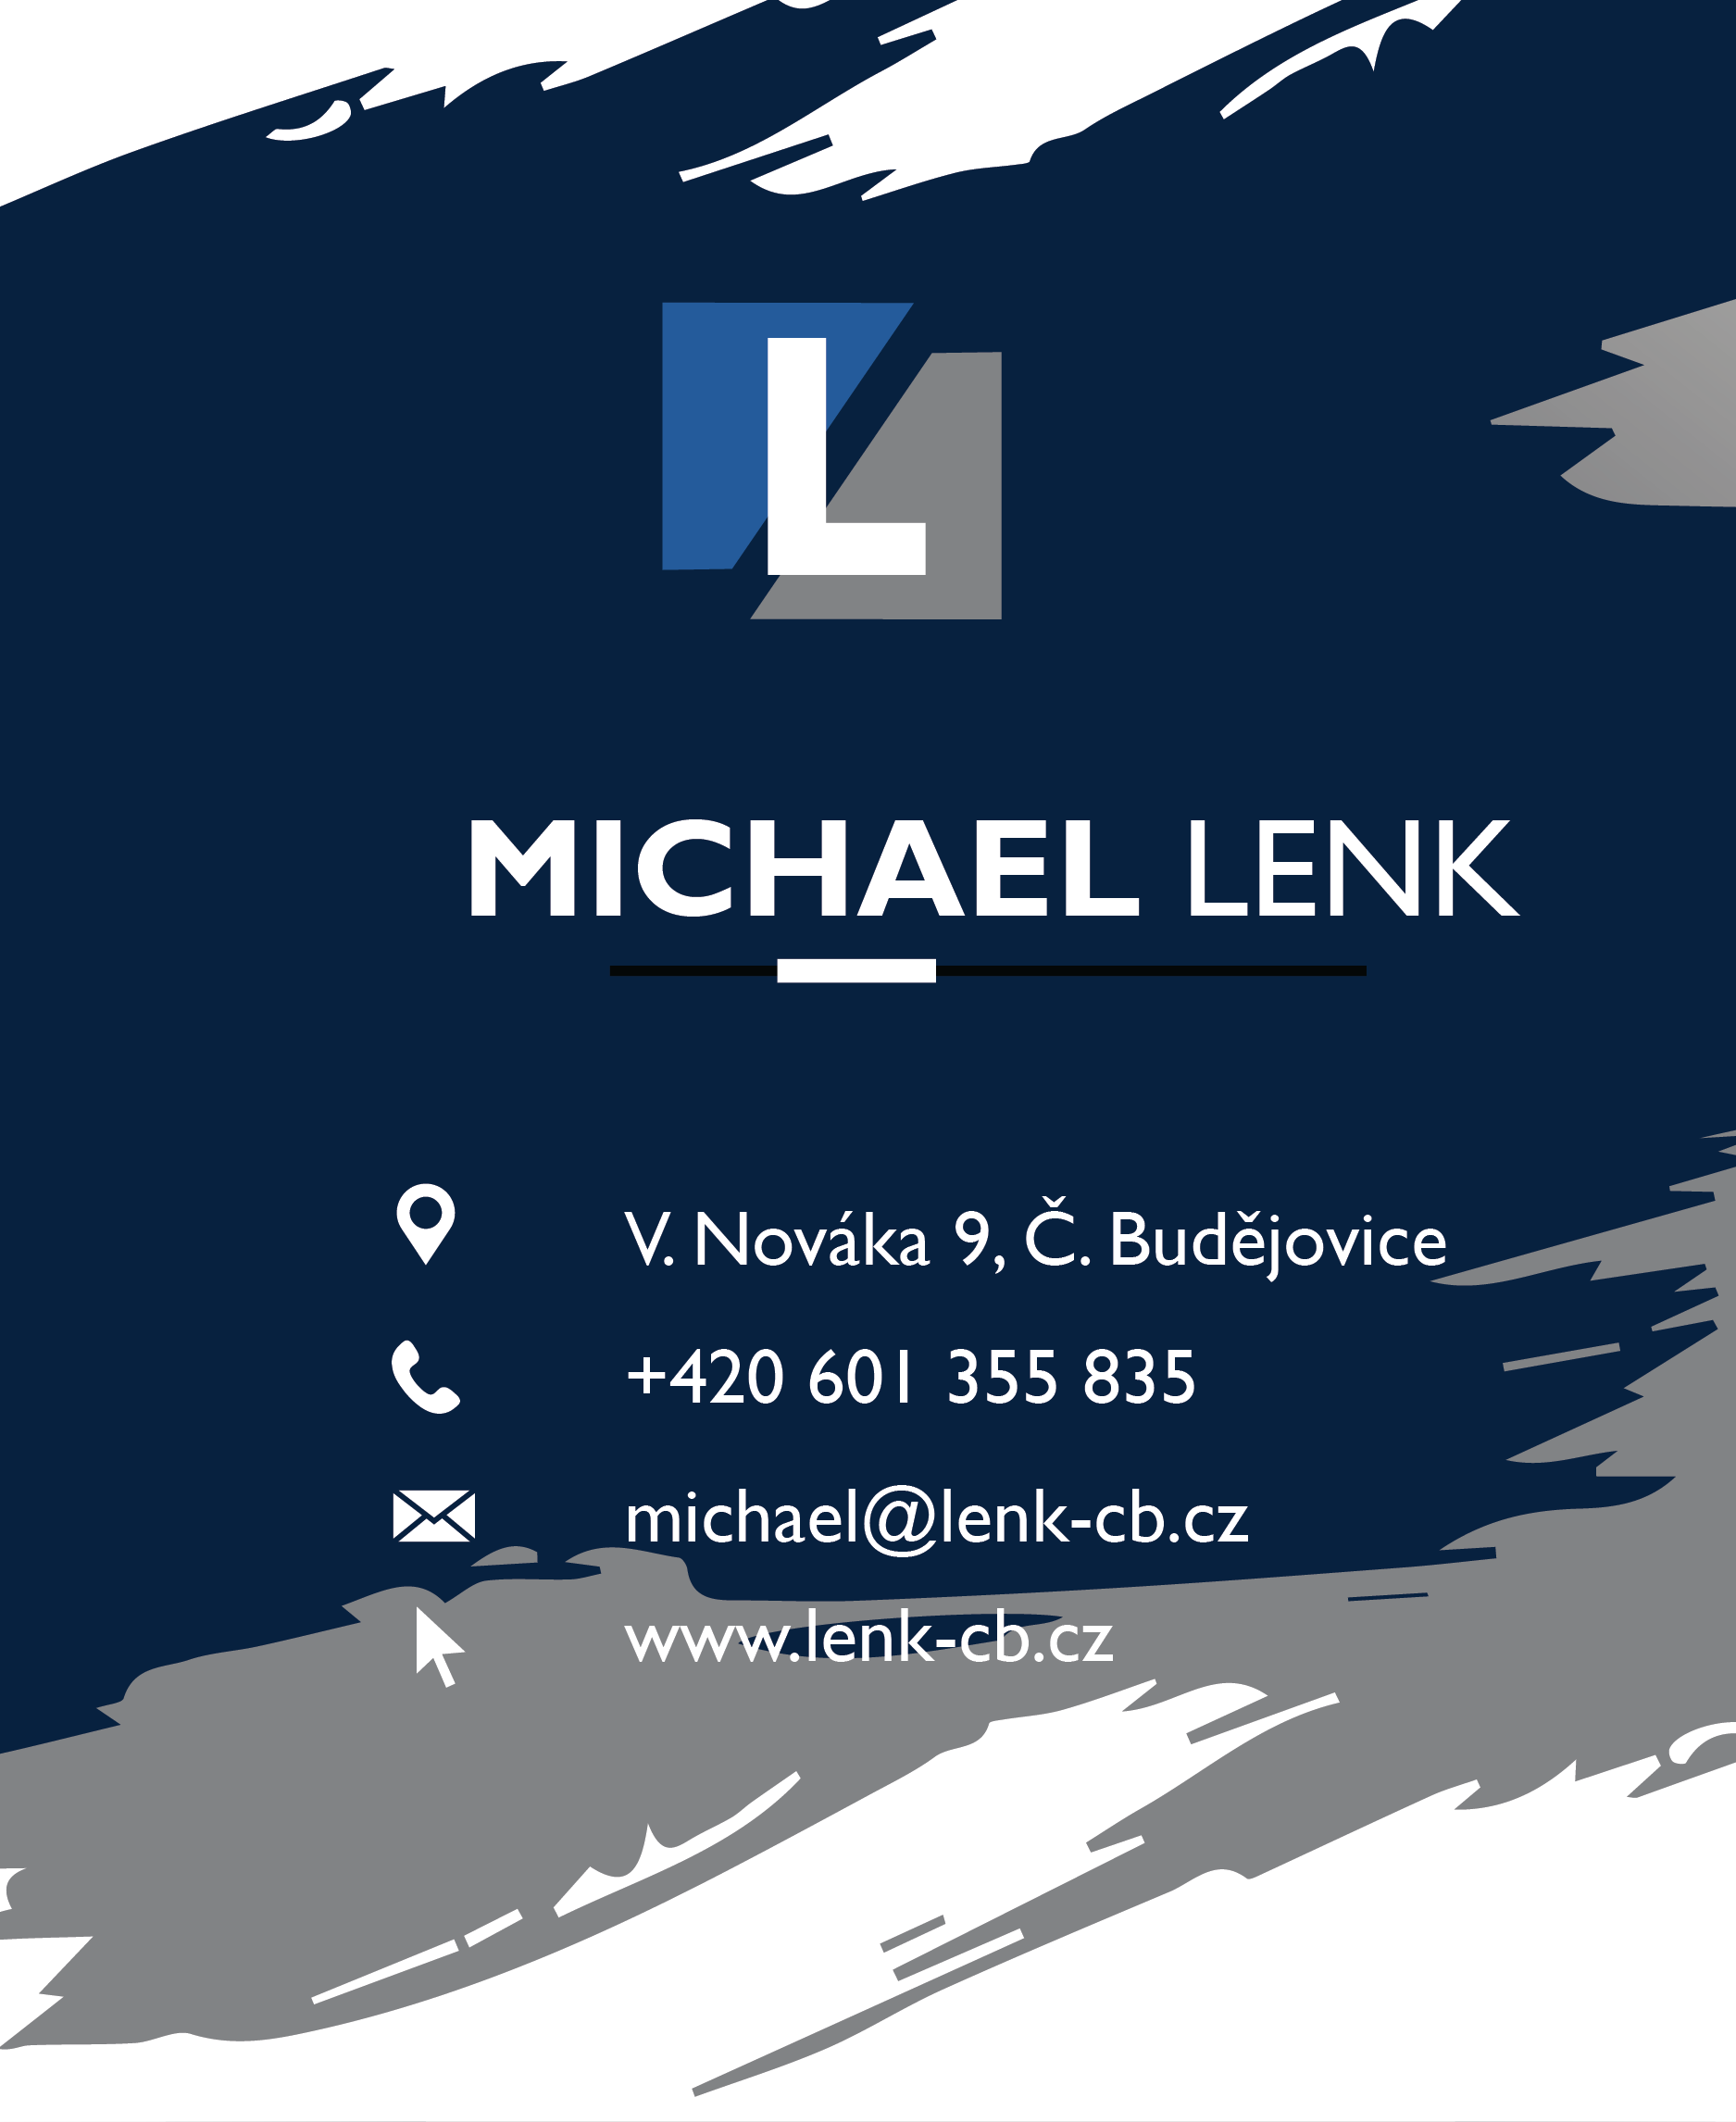 Michael Lenk